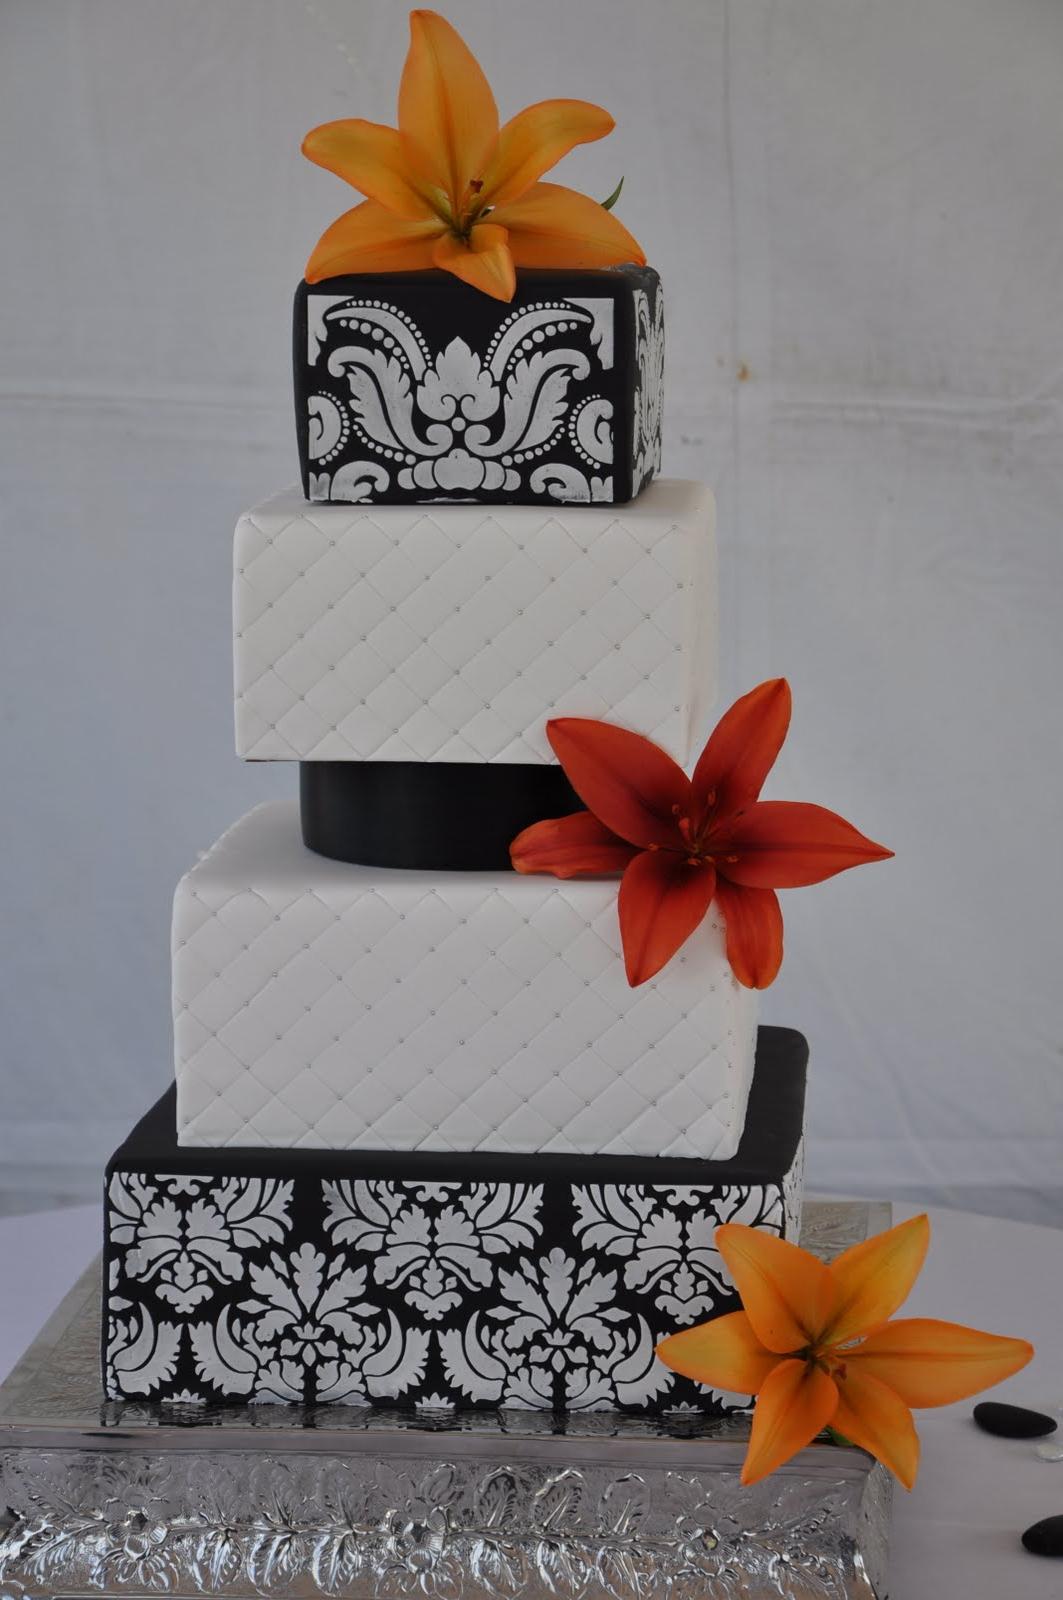 Black & White Wedding Cake. I